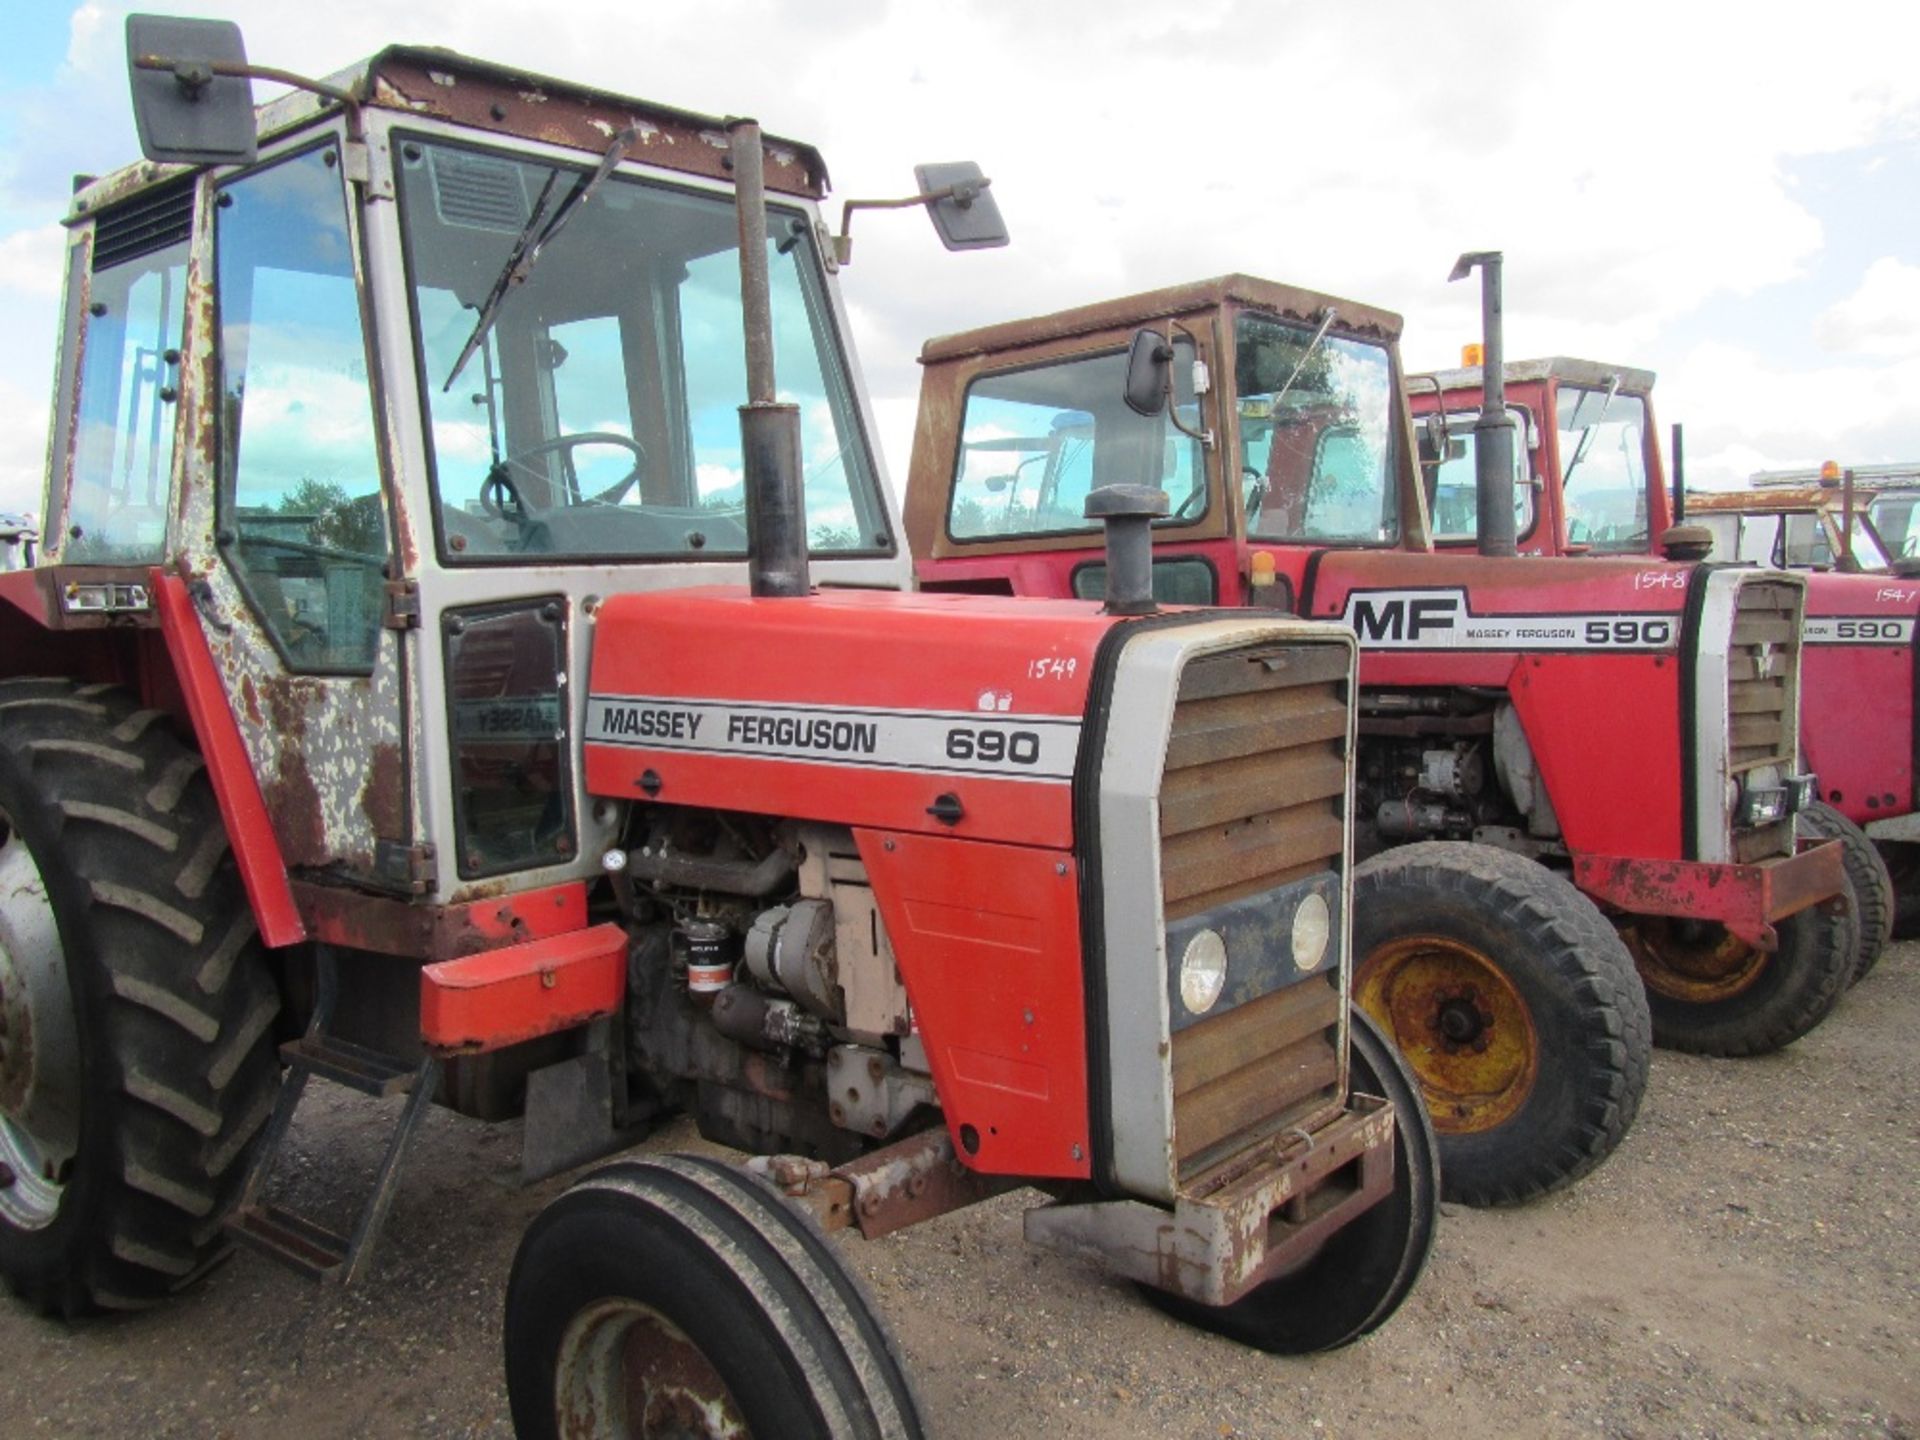 Massey Ferguson 690 Tractor - Image 2 of 7